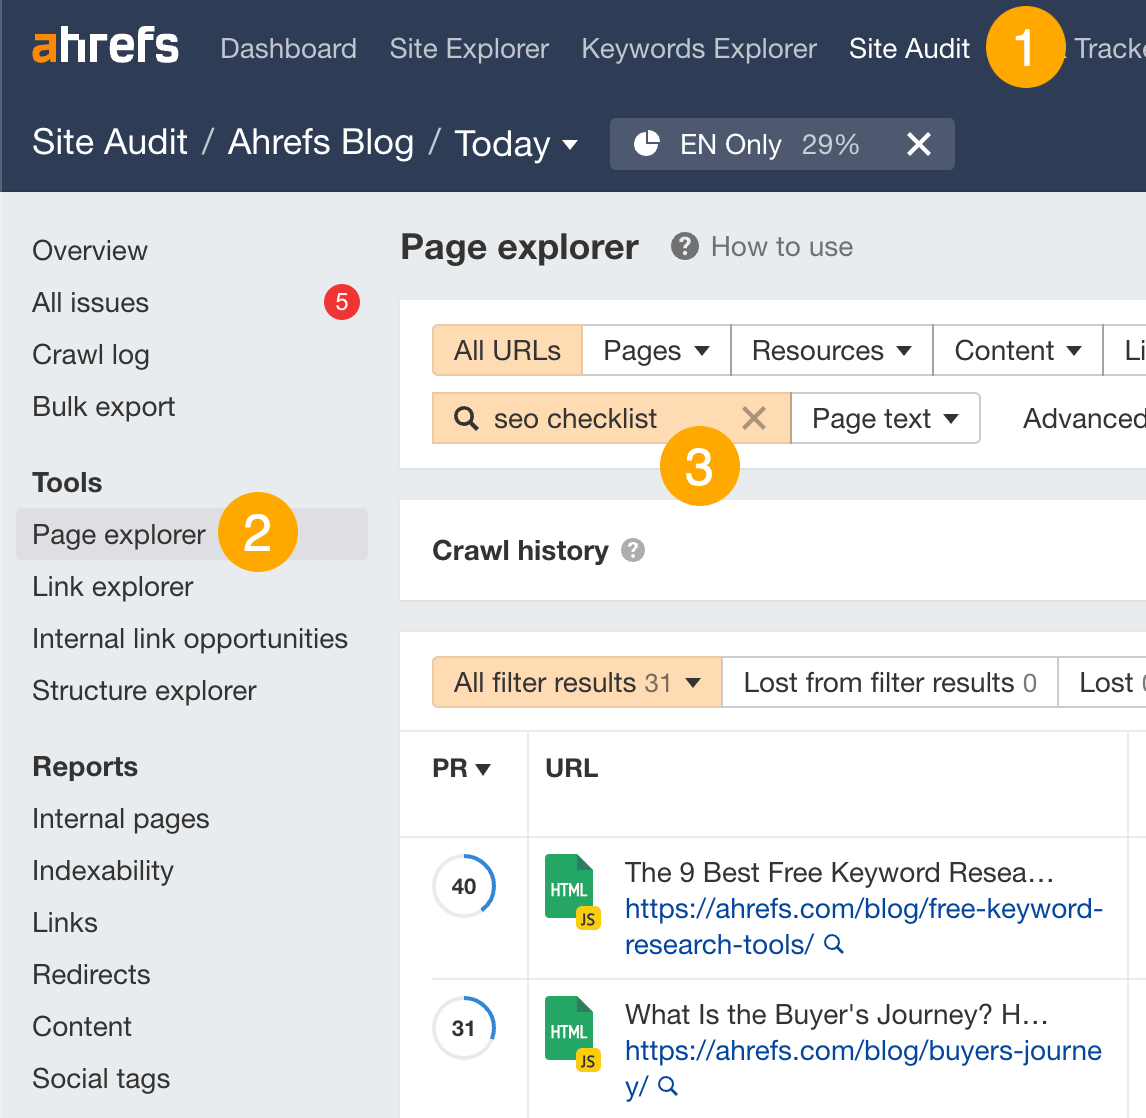 Ahrefs' Site Audit（网站诊断）中寻找内部链接机会